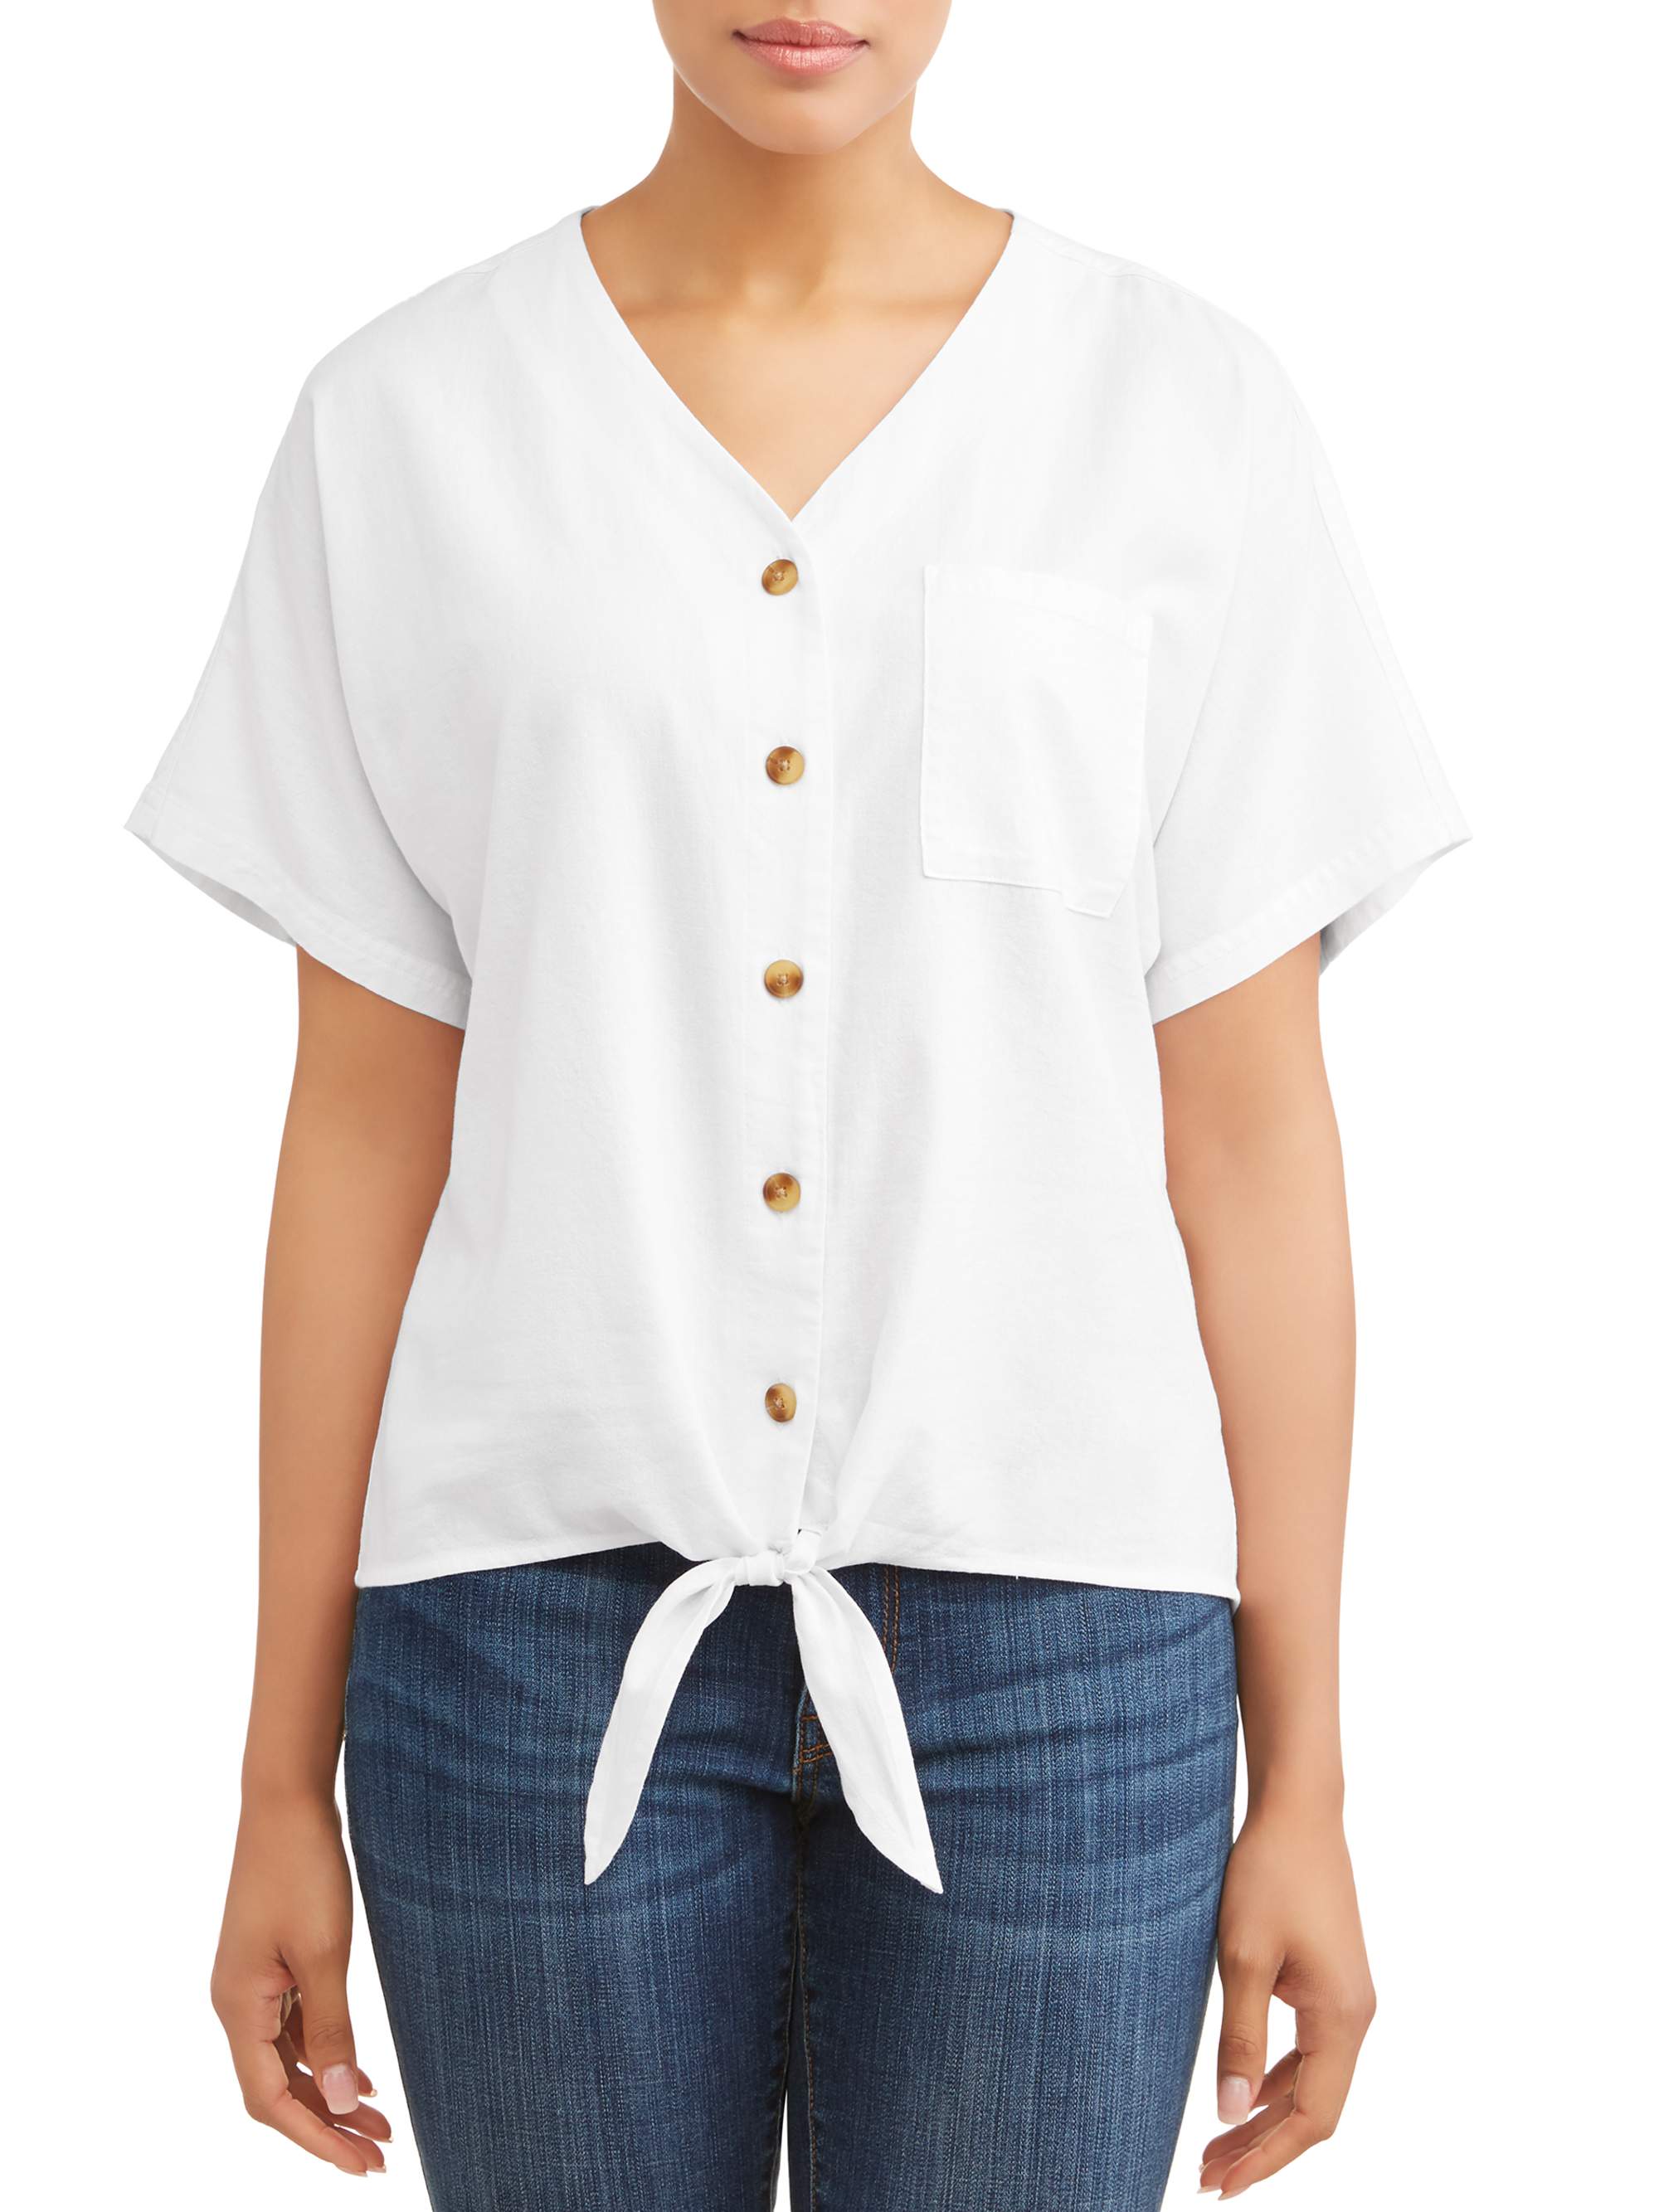 Women's Short Sleeve Linen Button Down Tie Blouse - image 1 of 4